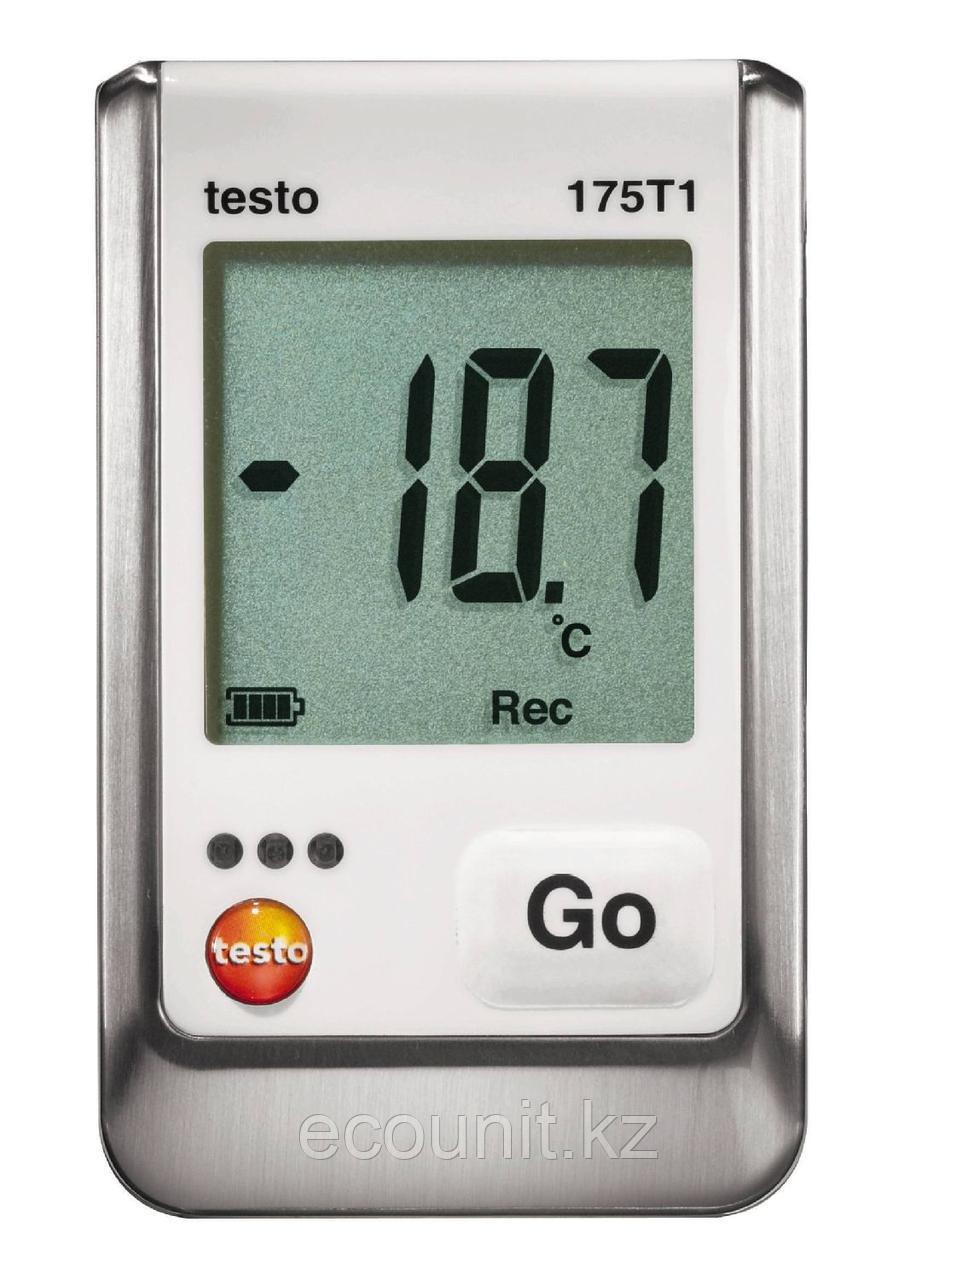 Testo Testo 175 T1 логгер данных температуры с внутренним сенсором (NTC) 0572 1751